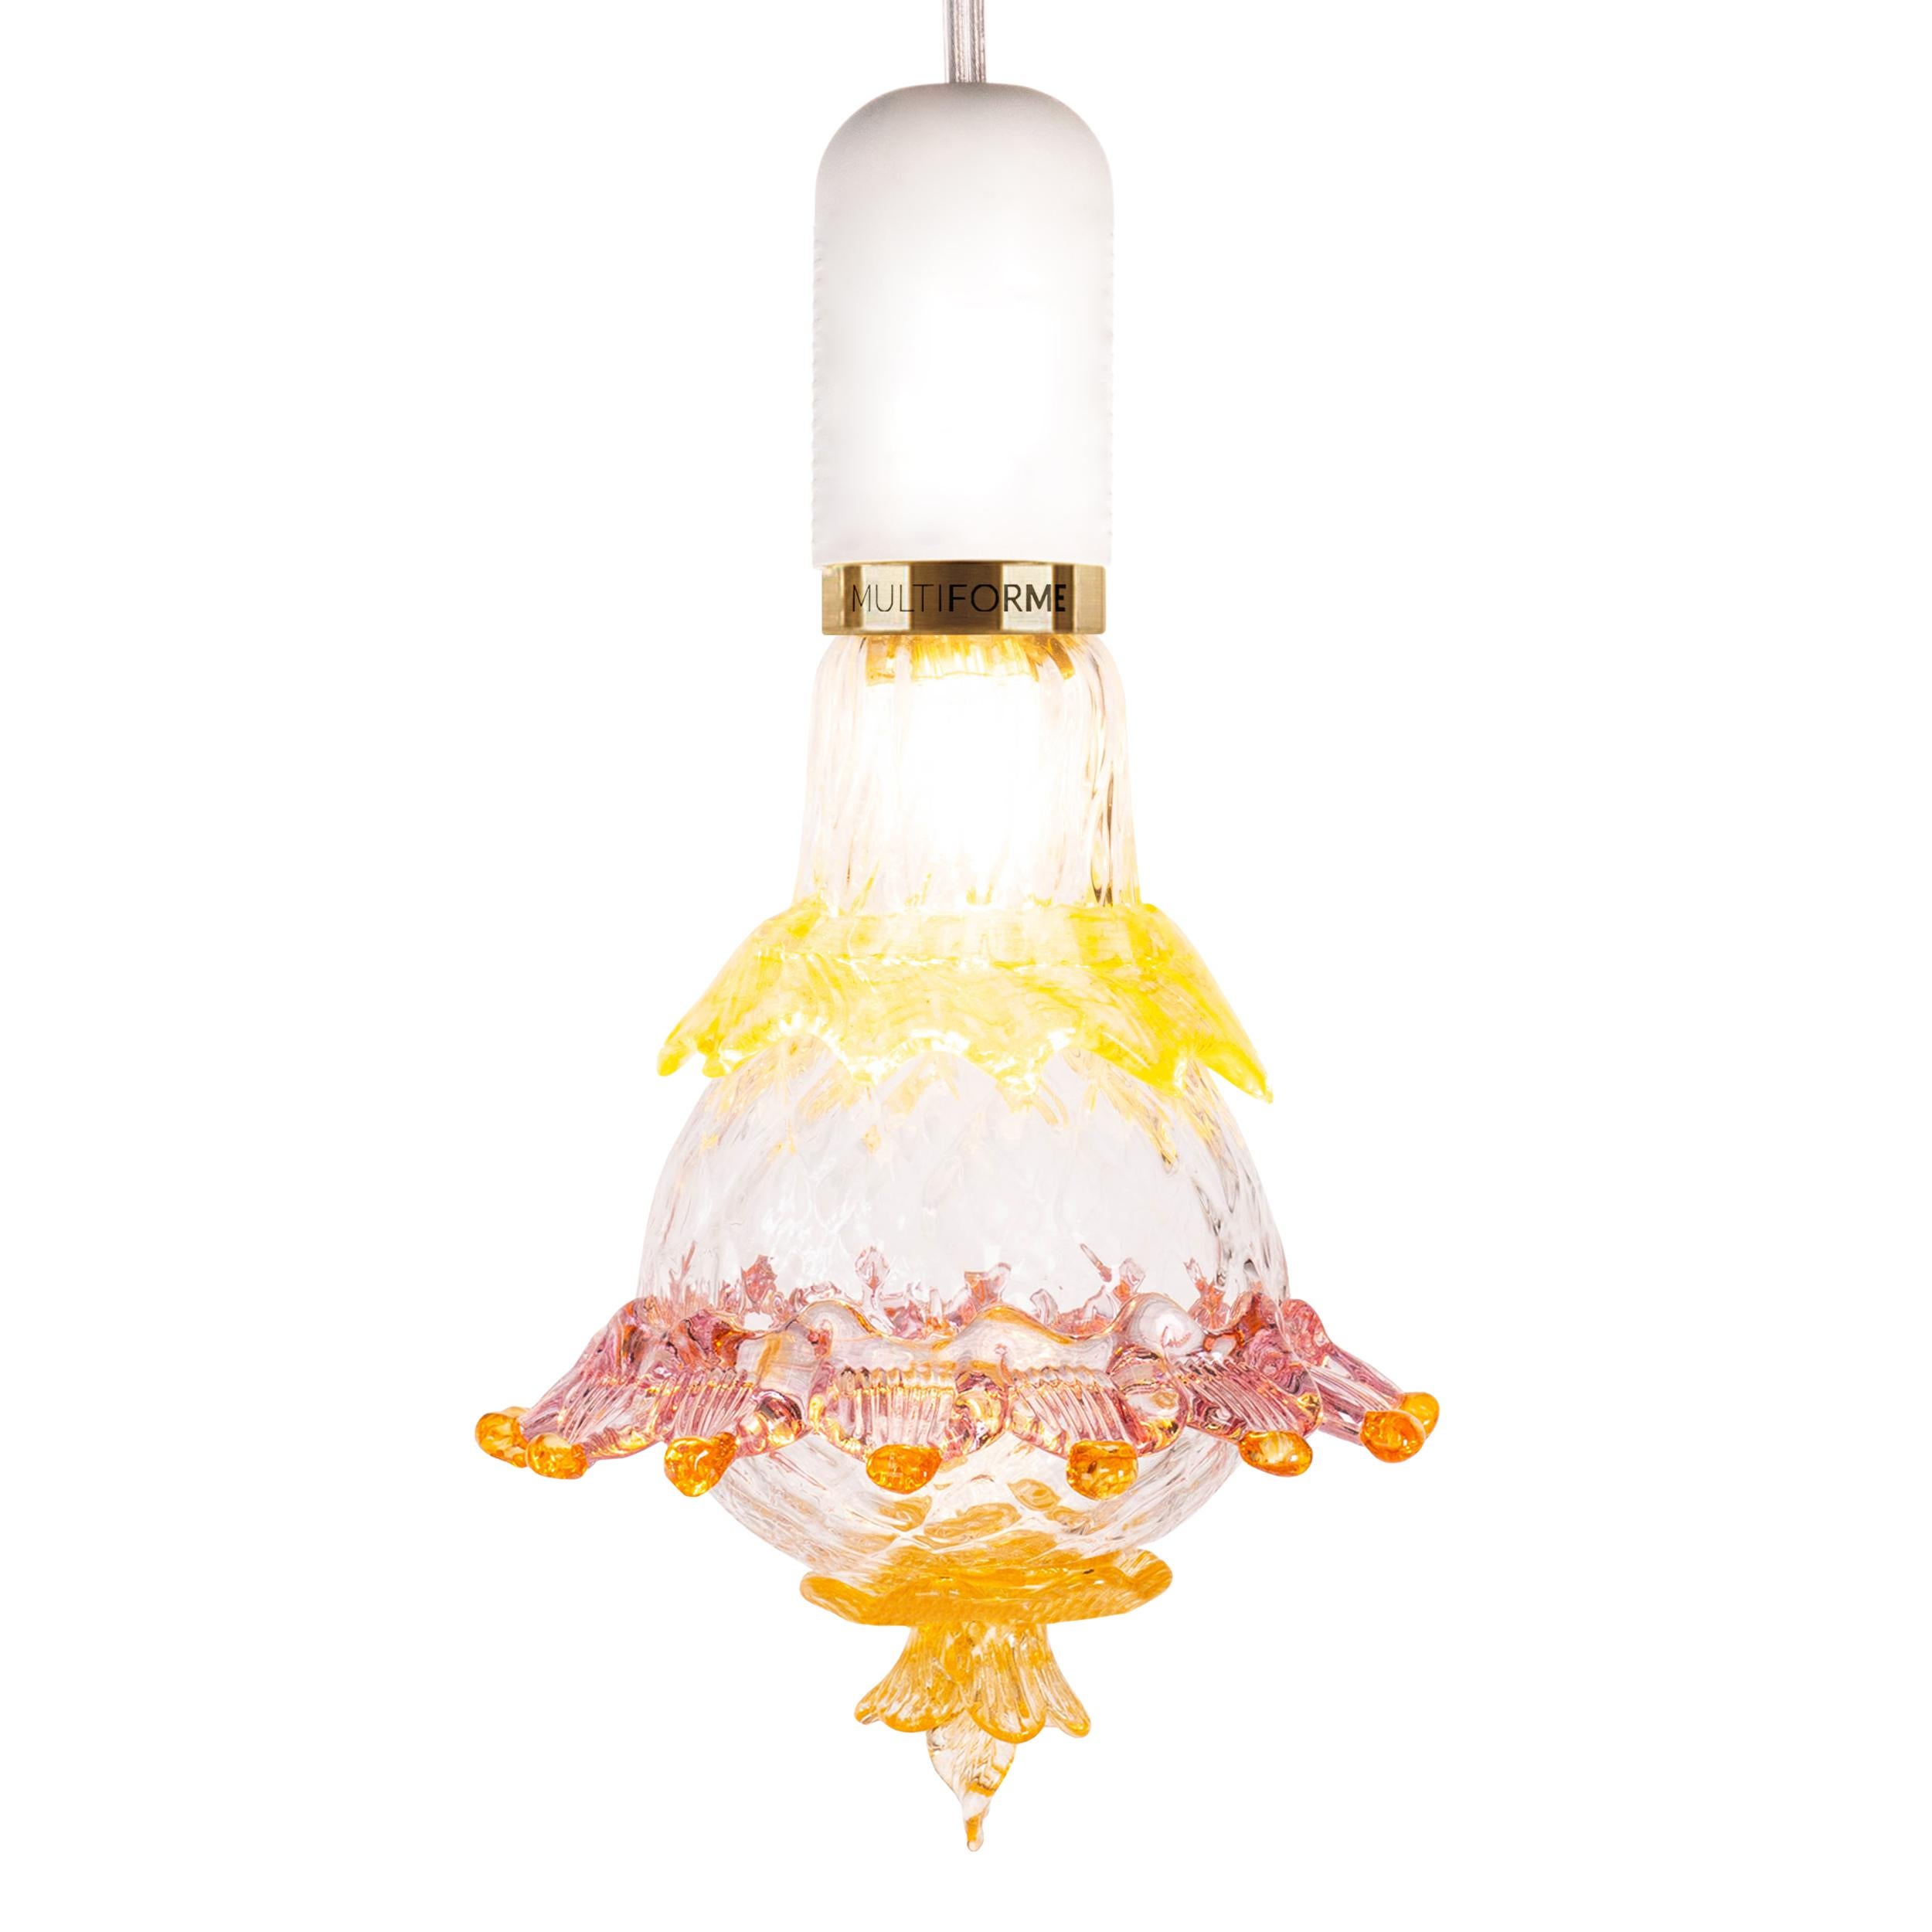 Artistic glass lightbulb chandelier Murano Bulb Marcantonio X Multiforme #10 In New Condition For Sale In Trebaseleghe, IT